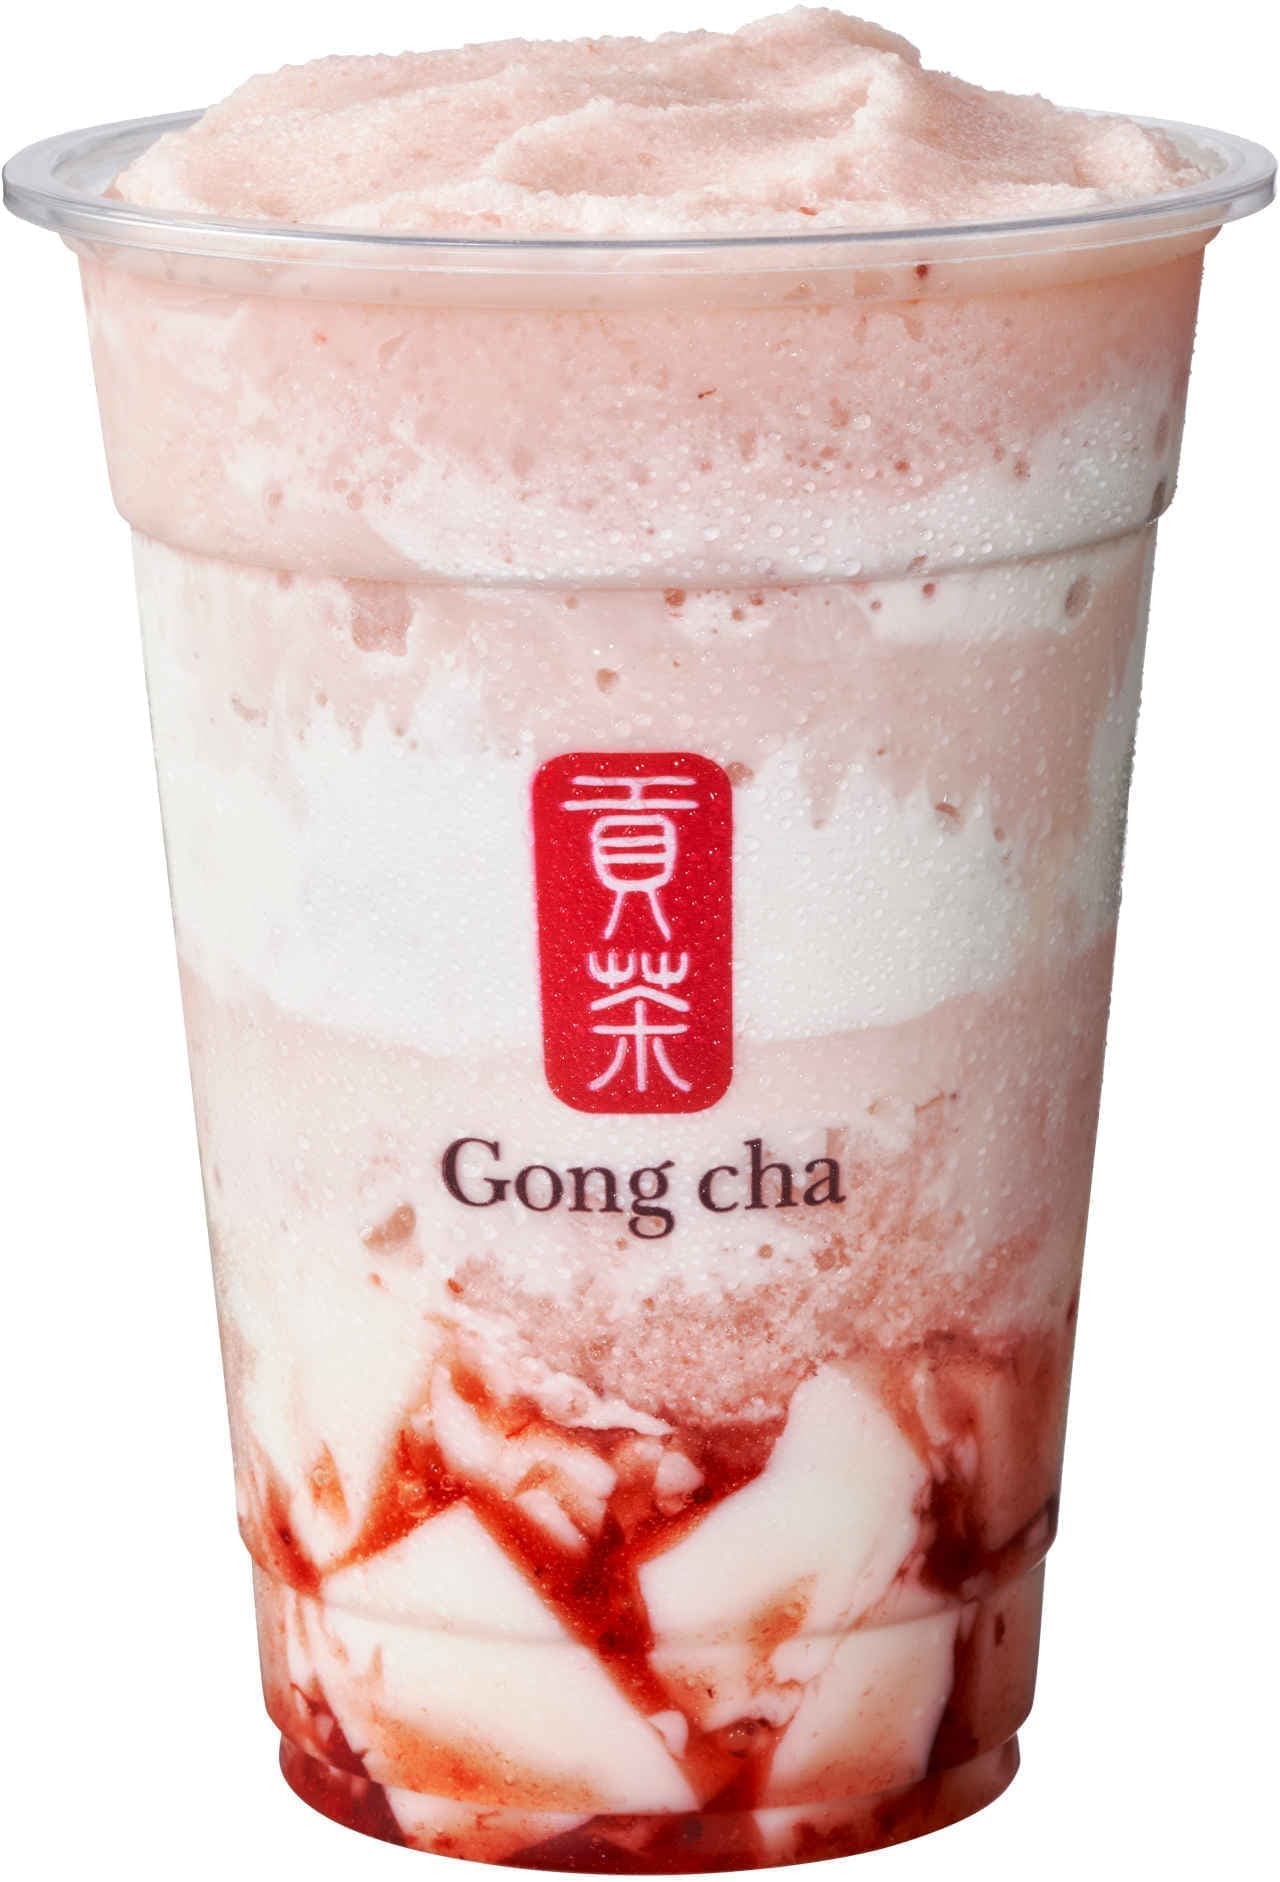 Gong Cha "Strawberry Apricot Alishan Milk Tea", "Strawberry Apricot Alishan Frozen Milk Tea", "Strawberry Apricot